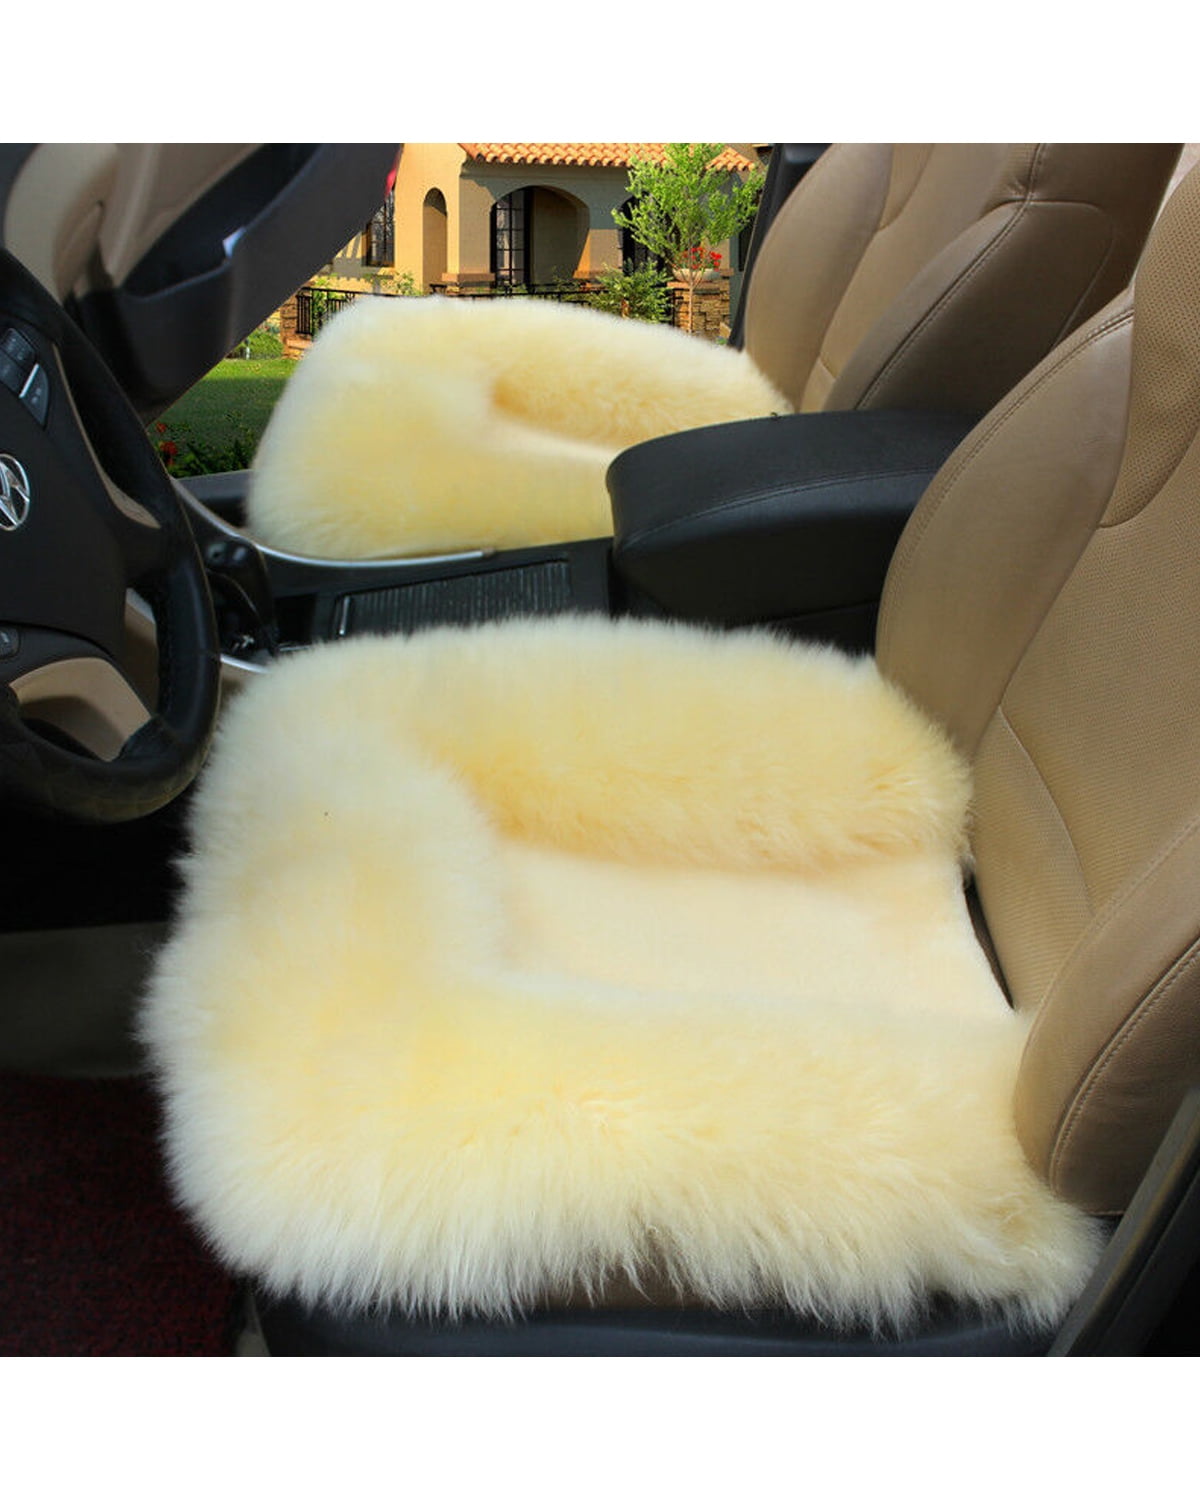 Fluffy Long Wool Pink Seat Cover Cushion Warm Winter Mat Universal US Stock 